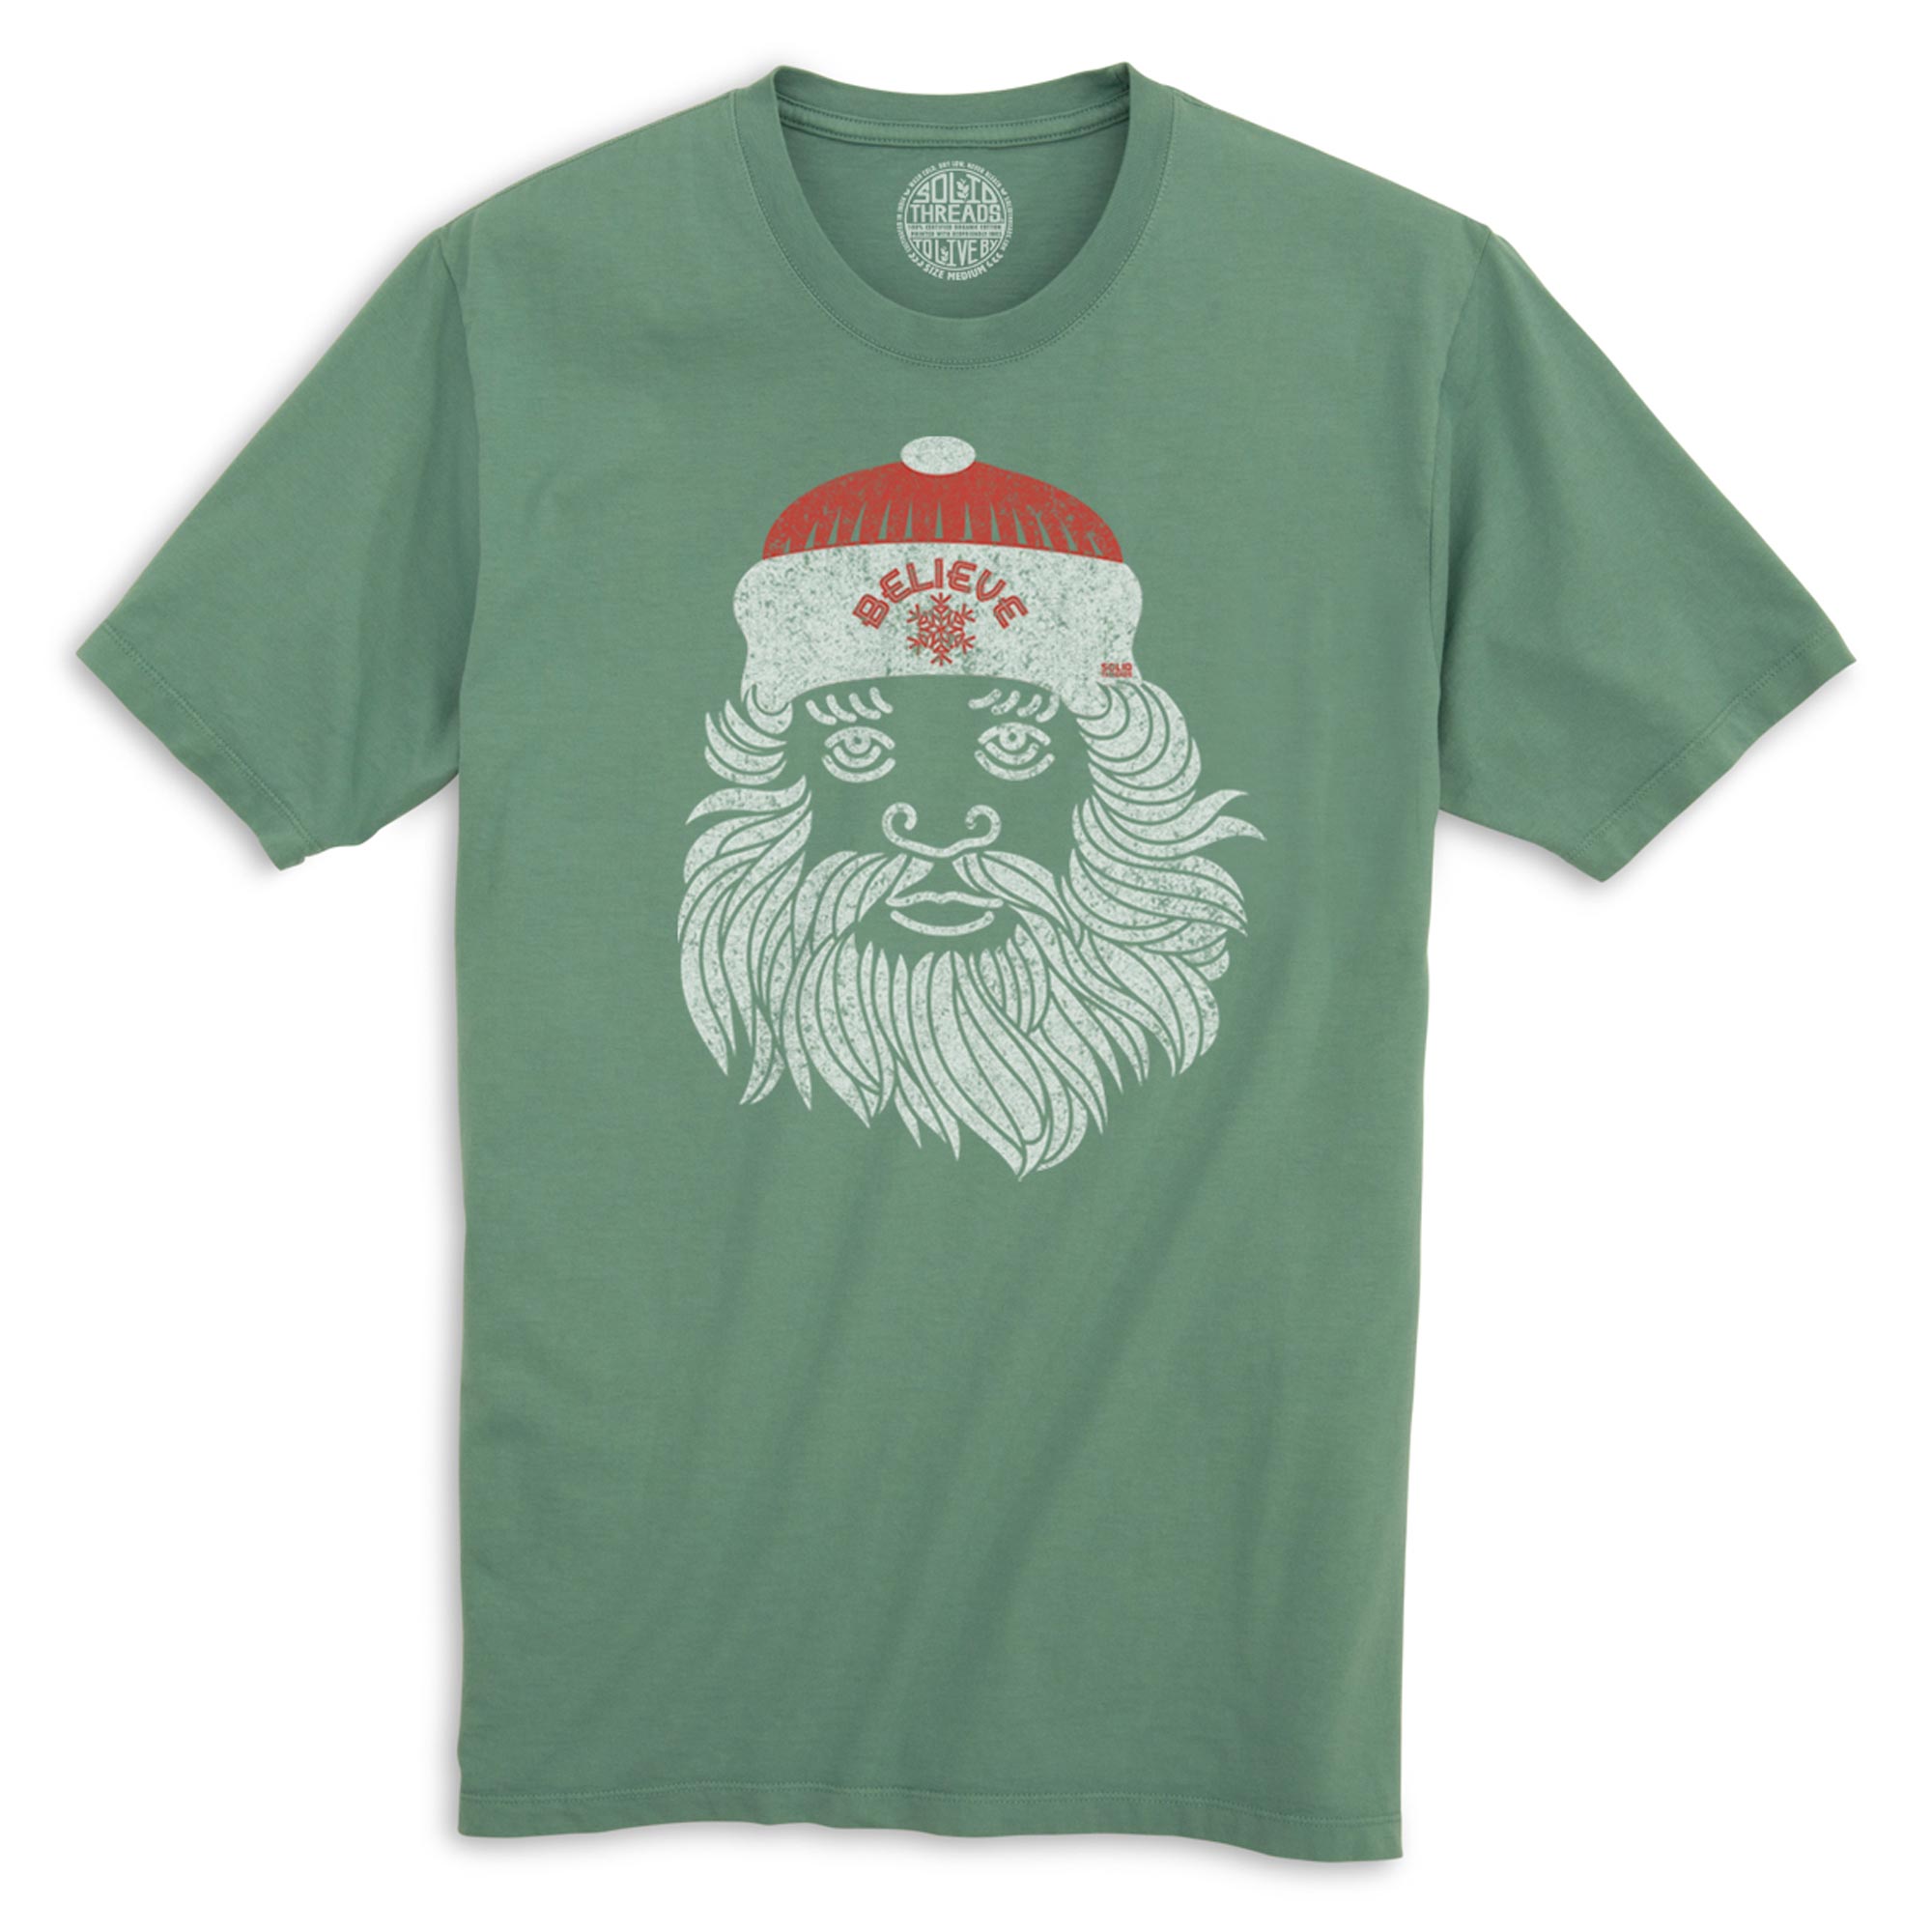 Believe In Santa Cool Organic Cotton T-shirt | Vintage Christmas Spirit  Tee | Solid Threads